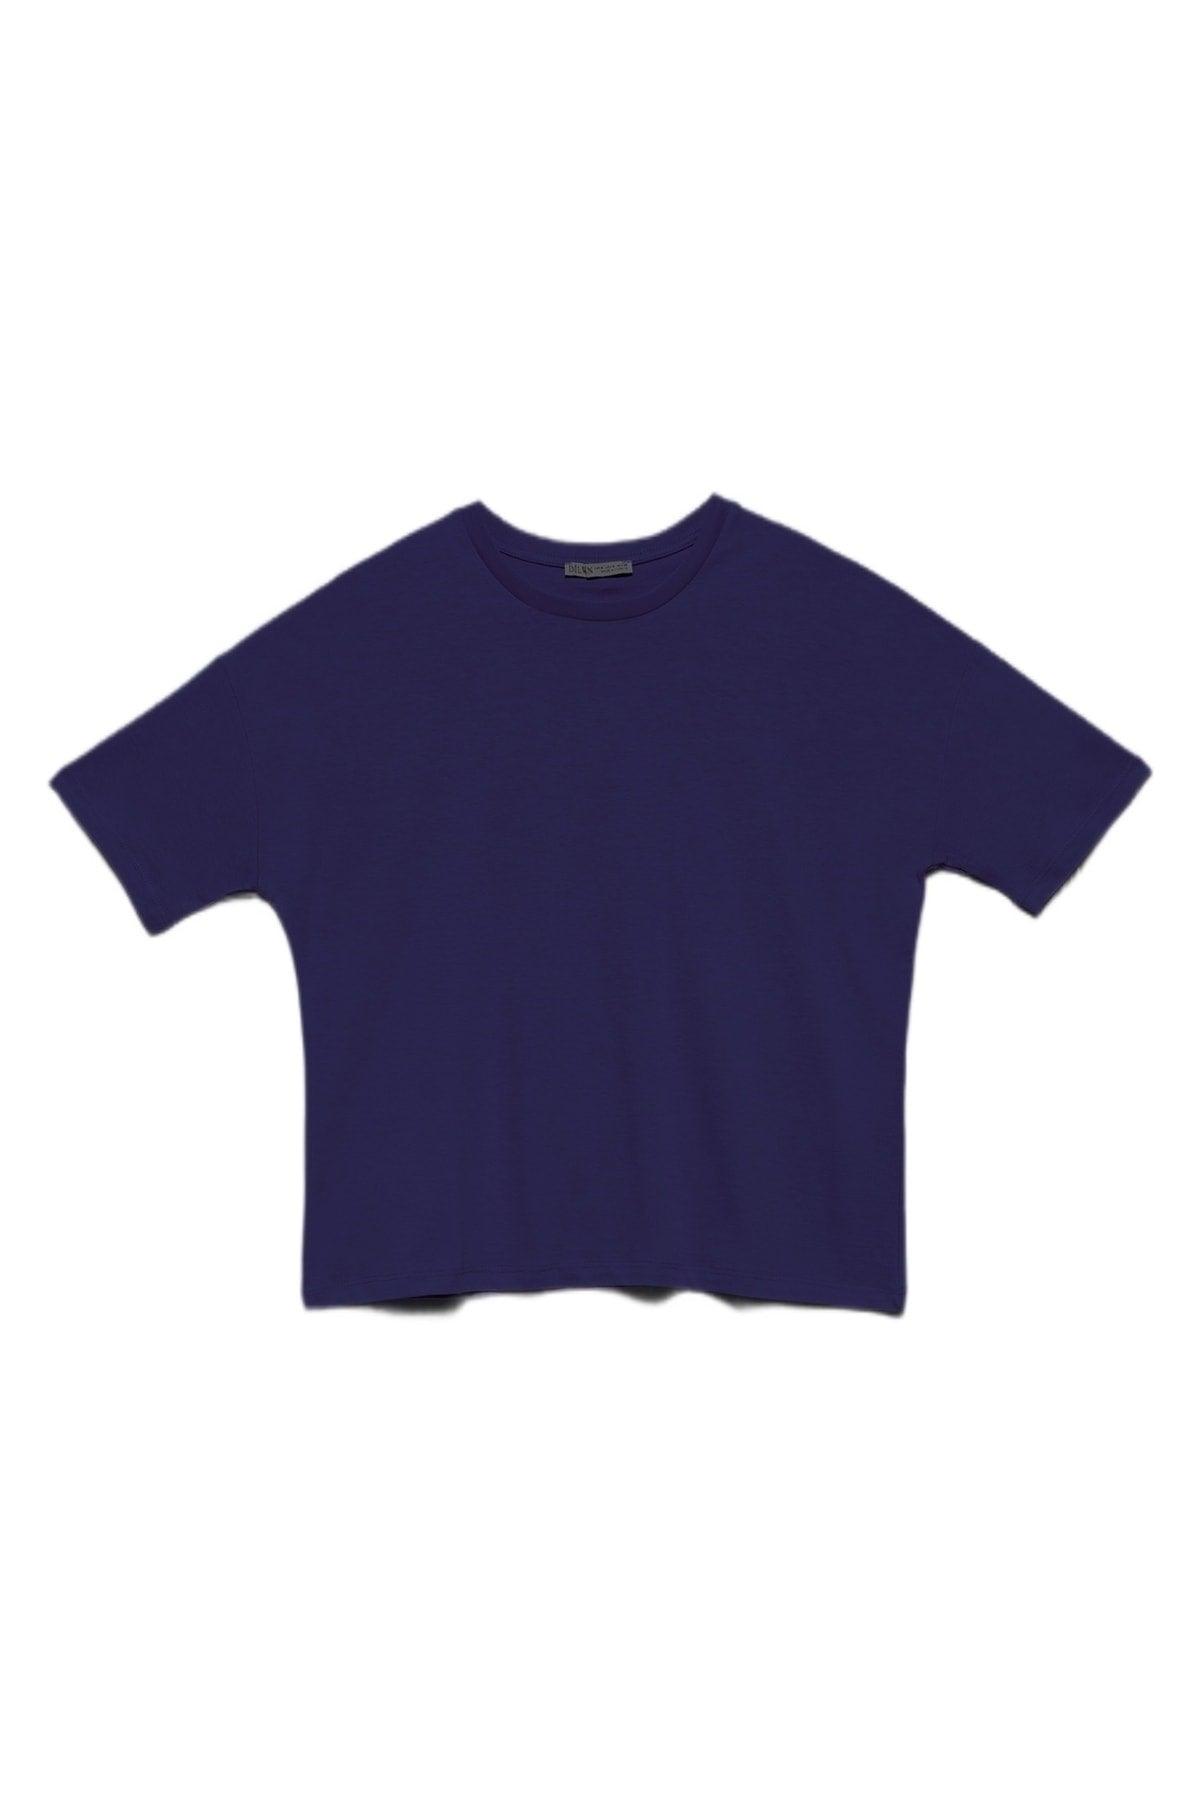 3683 Basic T-shirt-navy blue - Swordslife